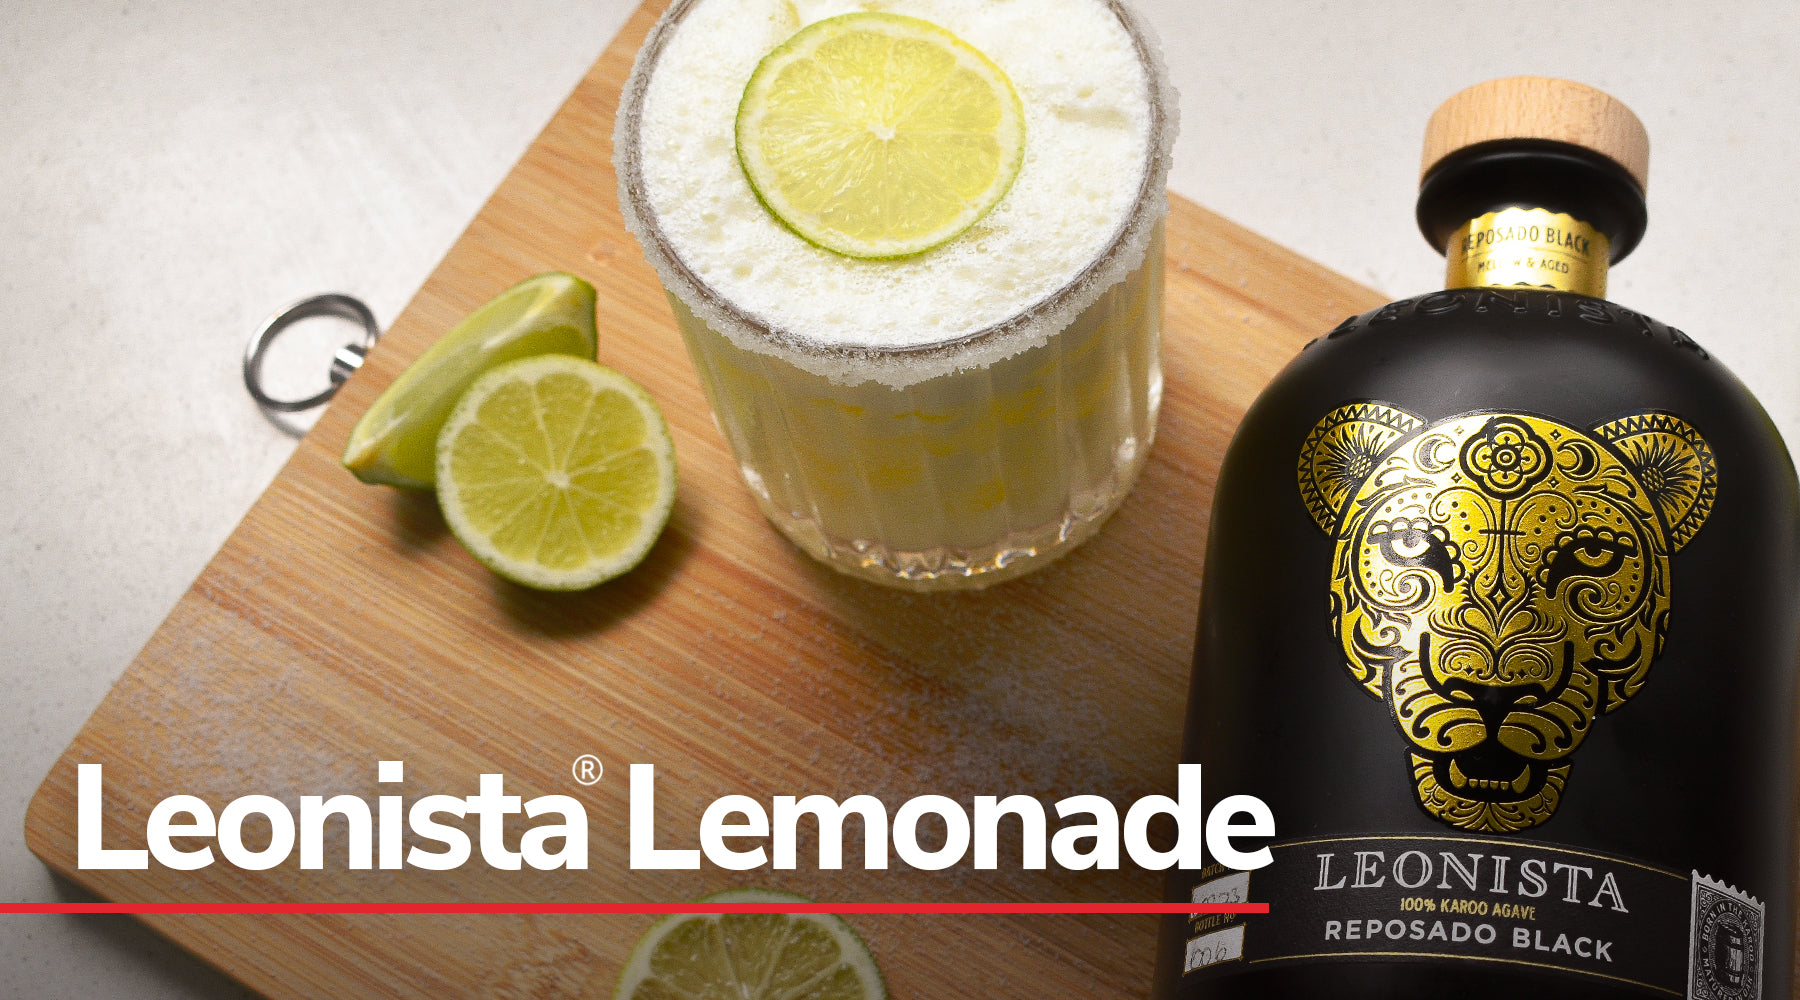 Leonista Lemonade